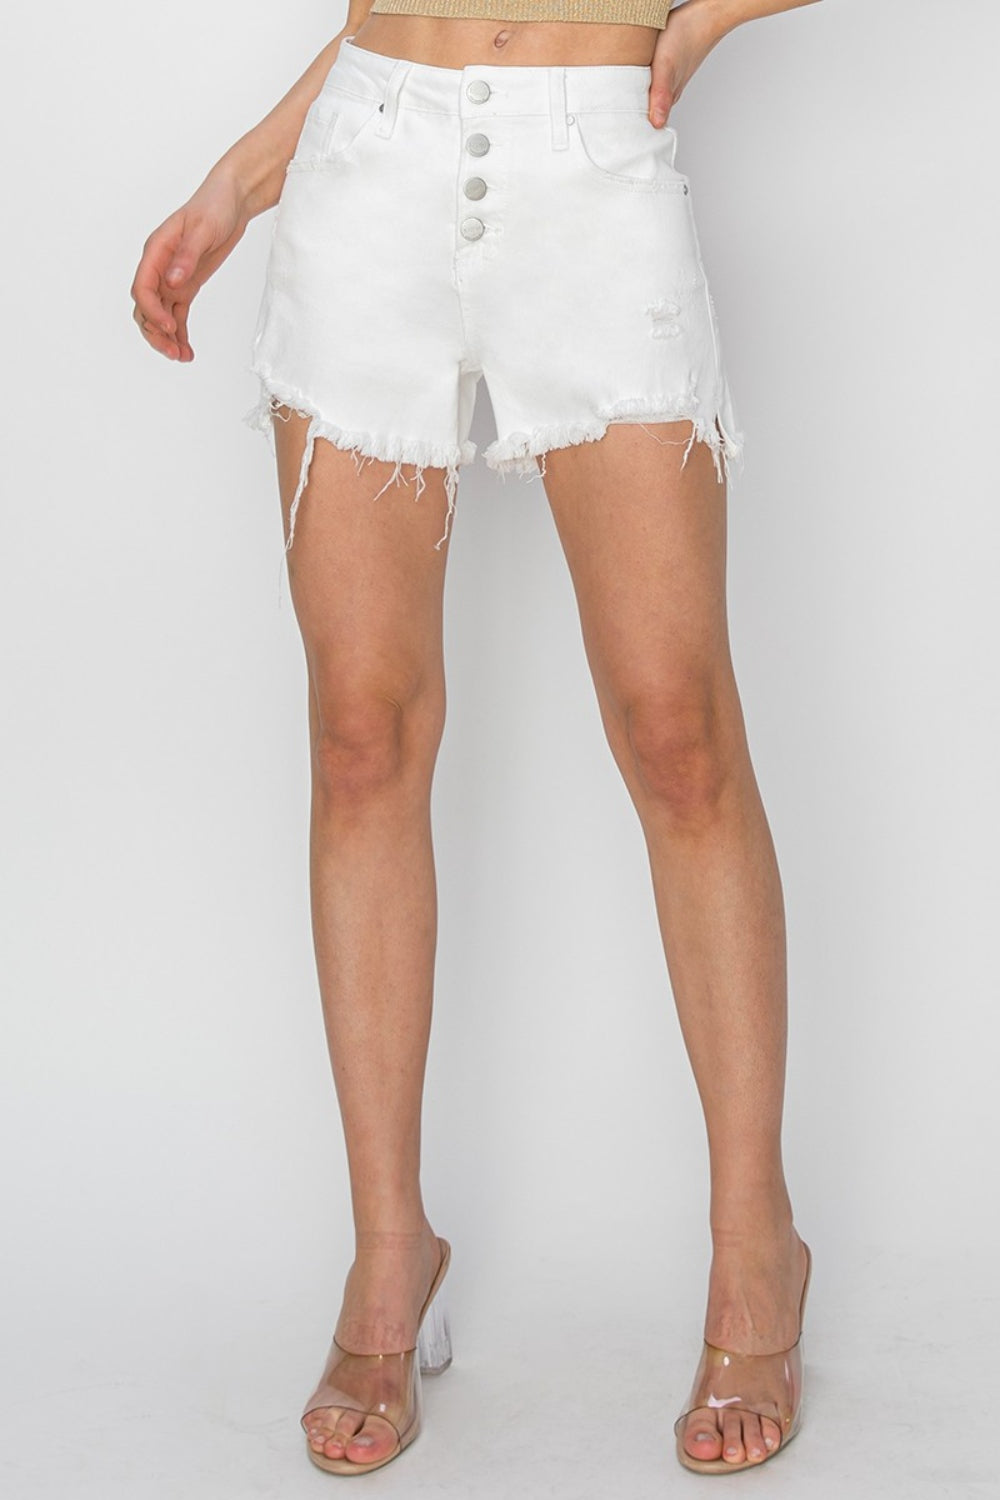 RISEN High Rise Button Fly Frayed Hem Distressed White Denim Shorts